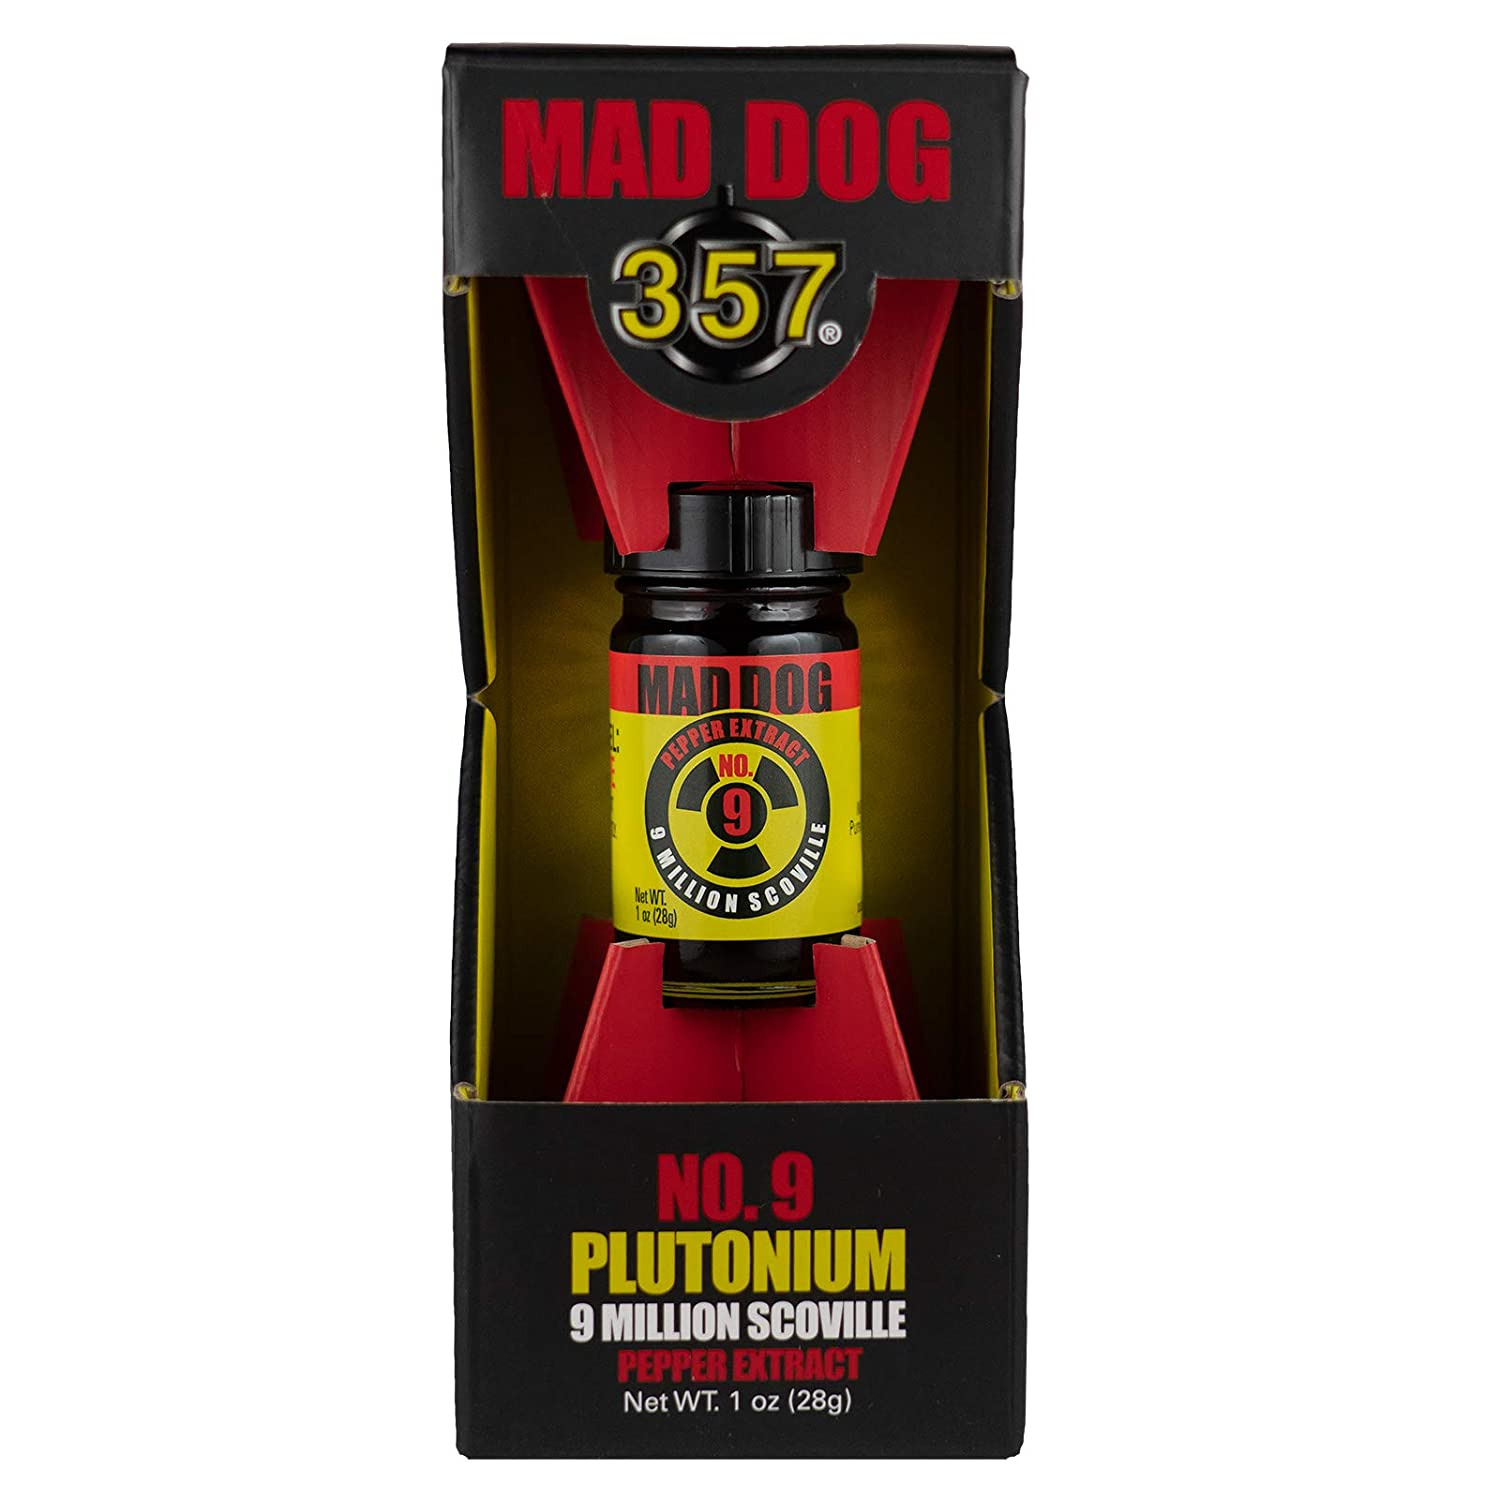 Mad Dog 357 No. 9 Plutonium 9 Million Scoville Pepper Extract, 1oz